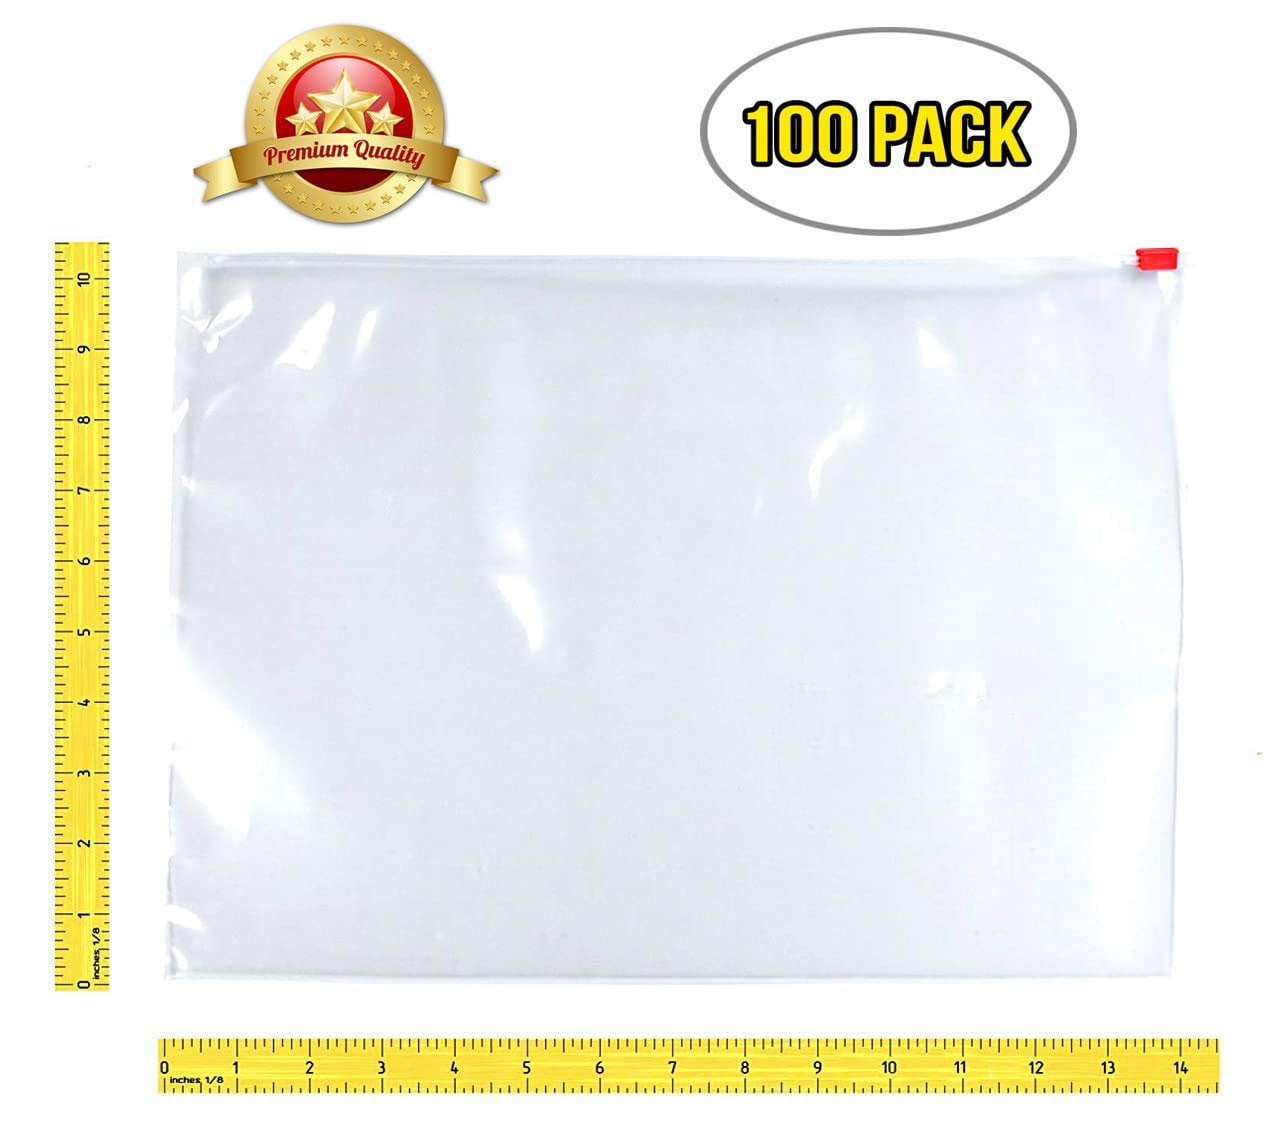 2 Mil Assortment Pack of Clearzip® Zip Locking Bags